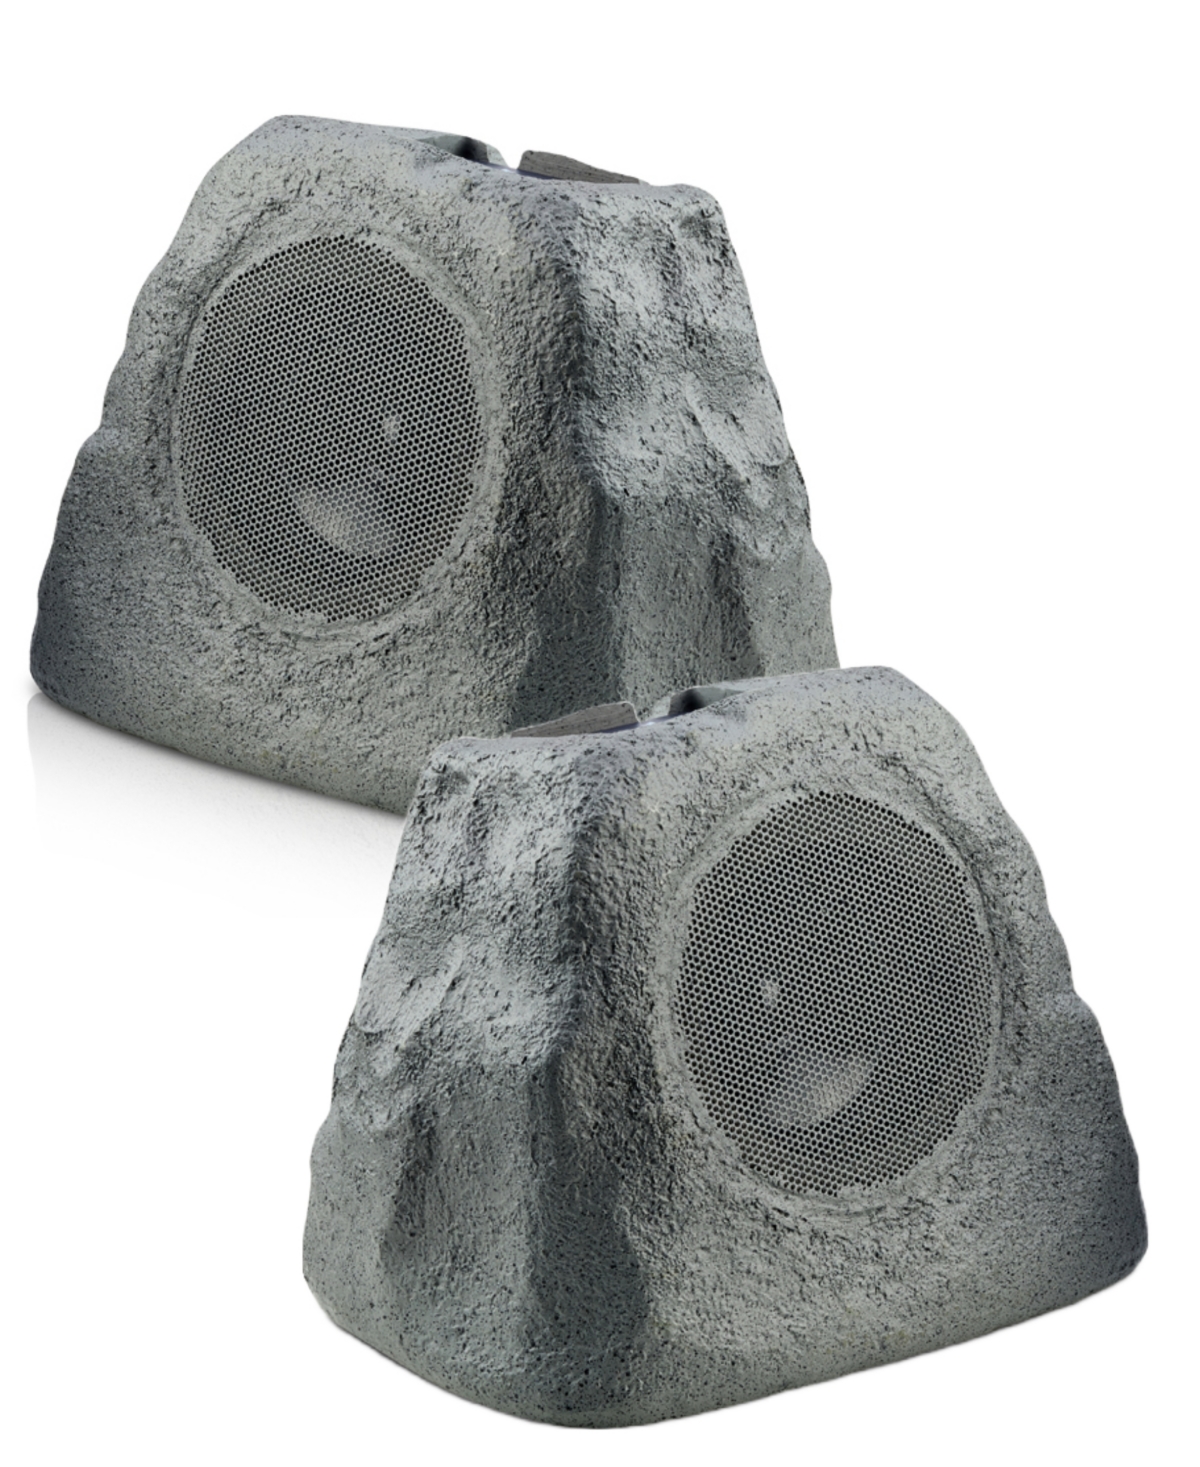 Ihome Ihrk-500ltms-pr Solar Powered Wireless Rock Speaker Set, 2 Piece In Gray